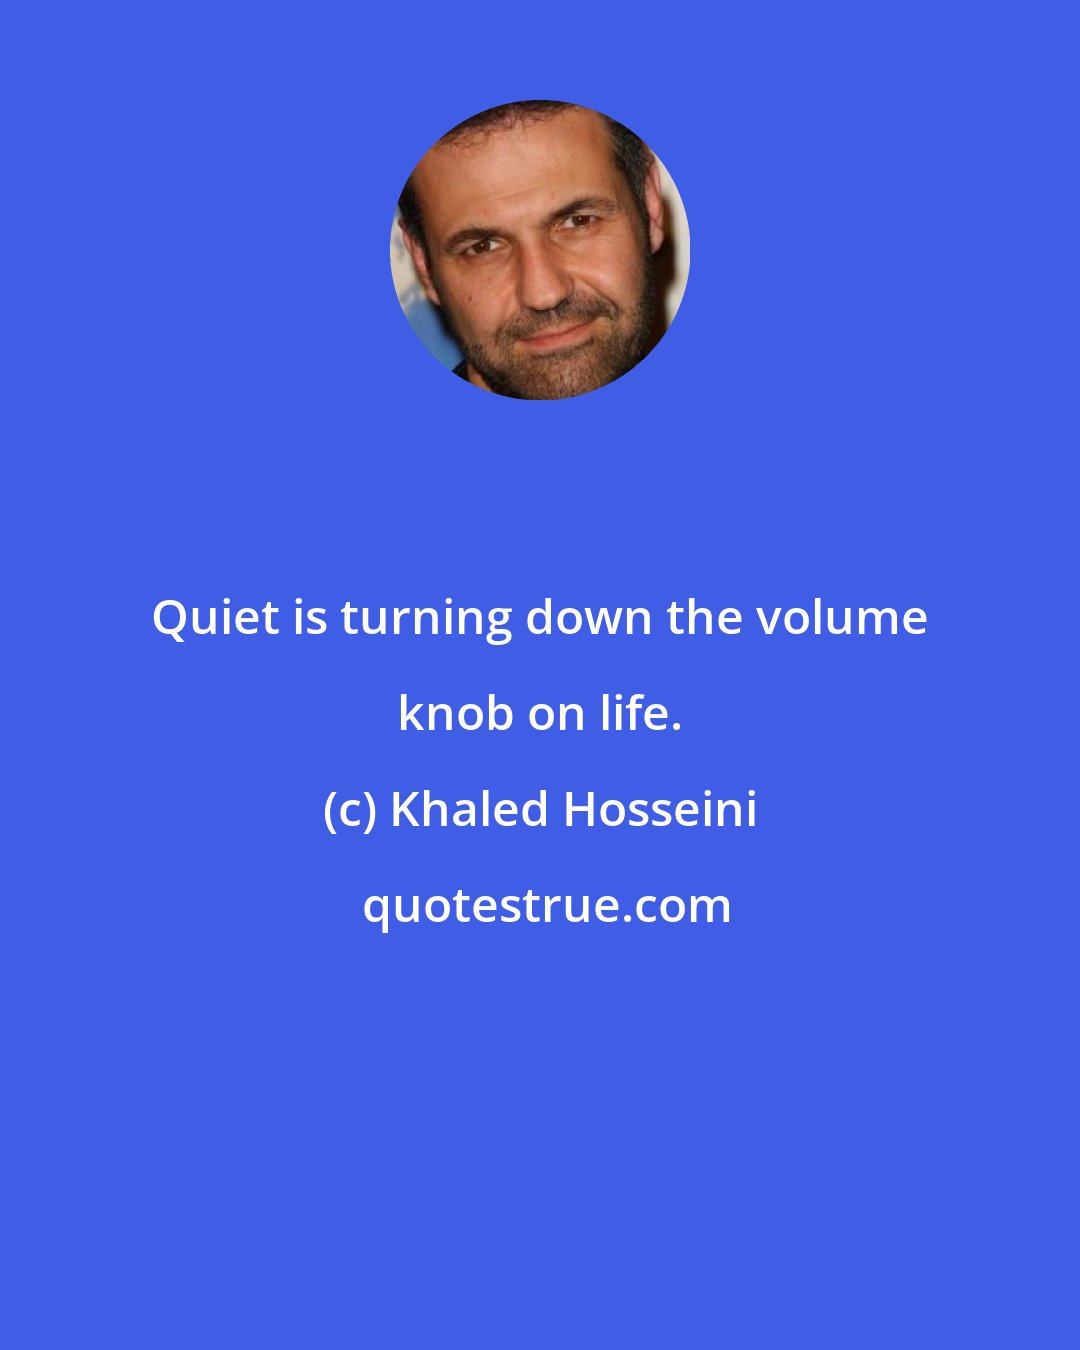 Khaled Hosseini: Quiet is turning down the volume knob on life.